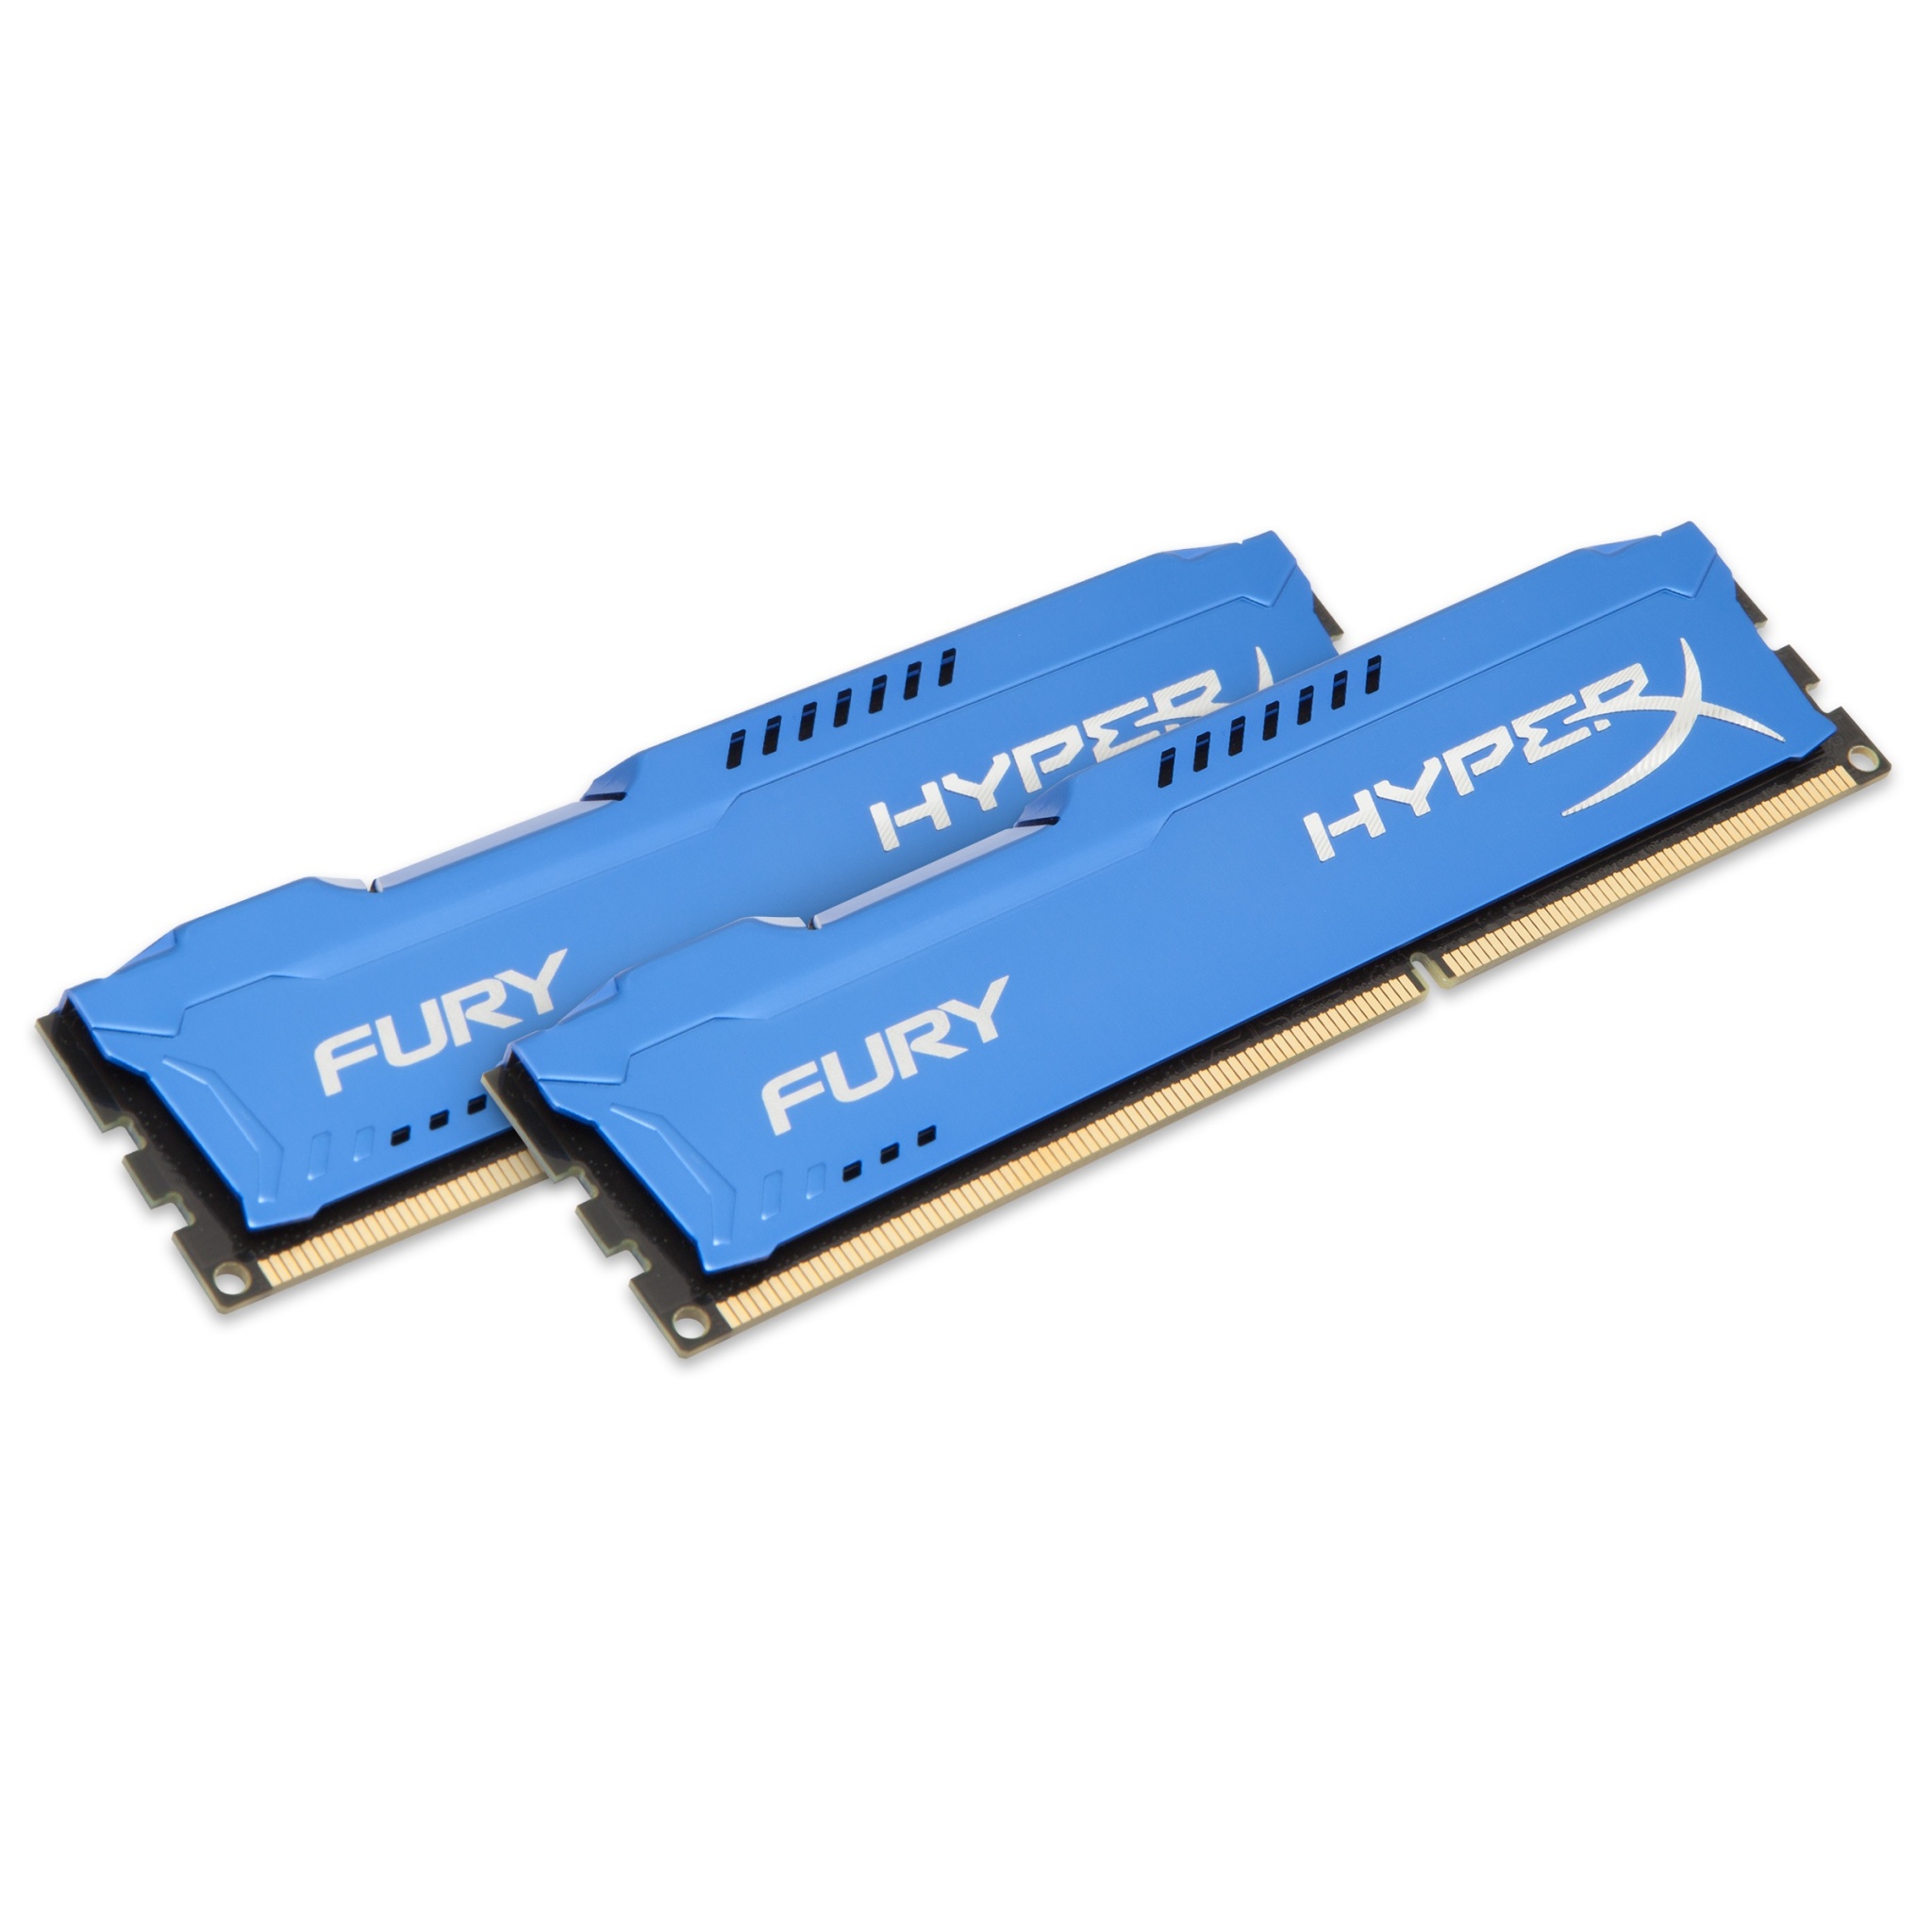 Onderdompeling wenselijk Mm 16GB Kingston HyperX FURY DDR3 PC3-12800 1600MHz CL10 Blue Dual Channel Kit  (2x 8GB)